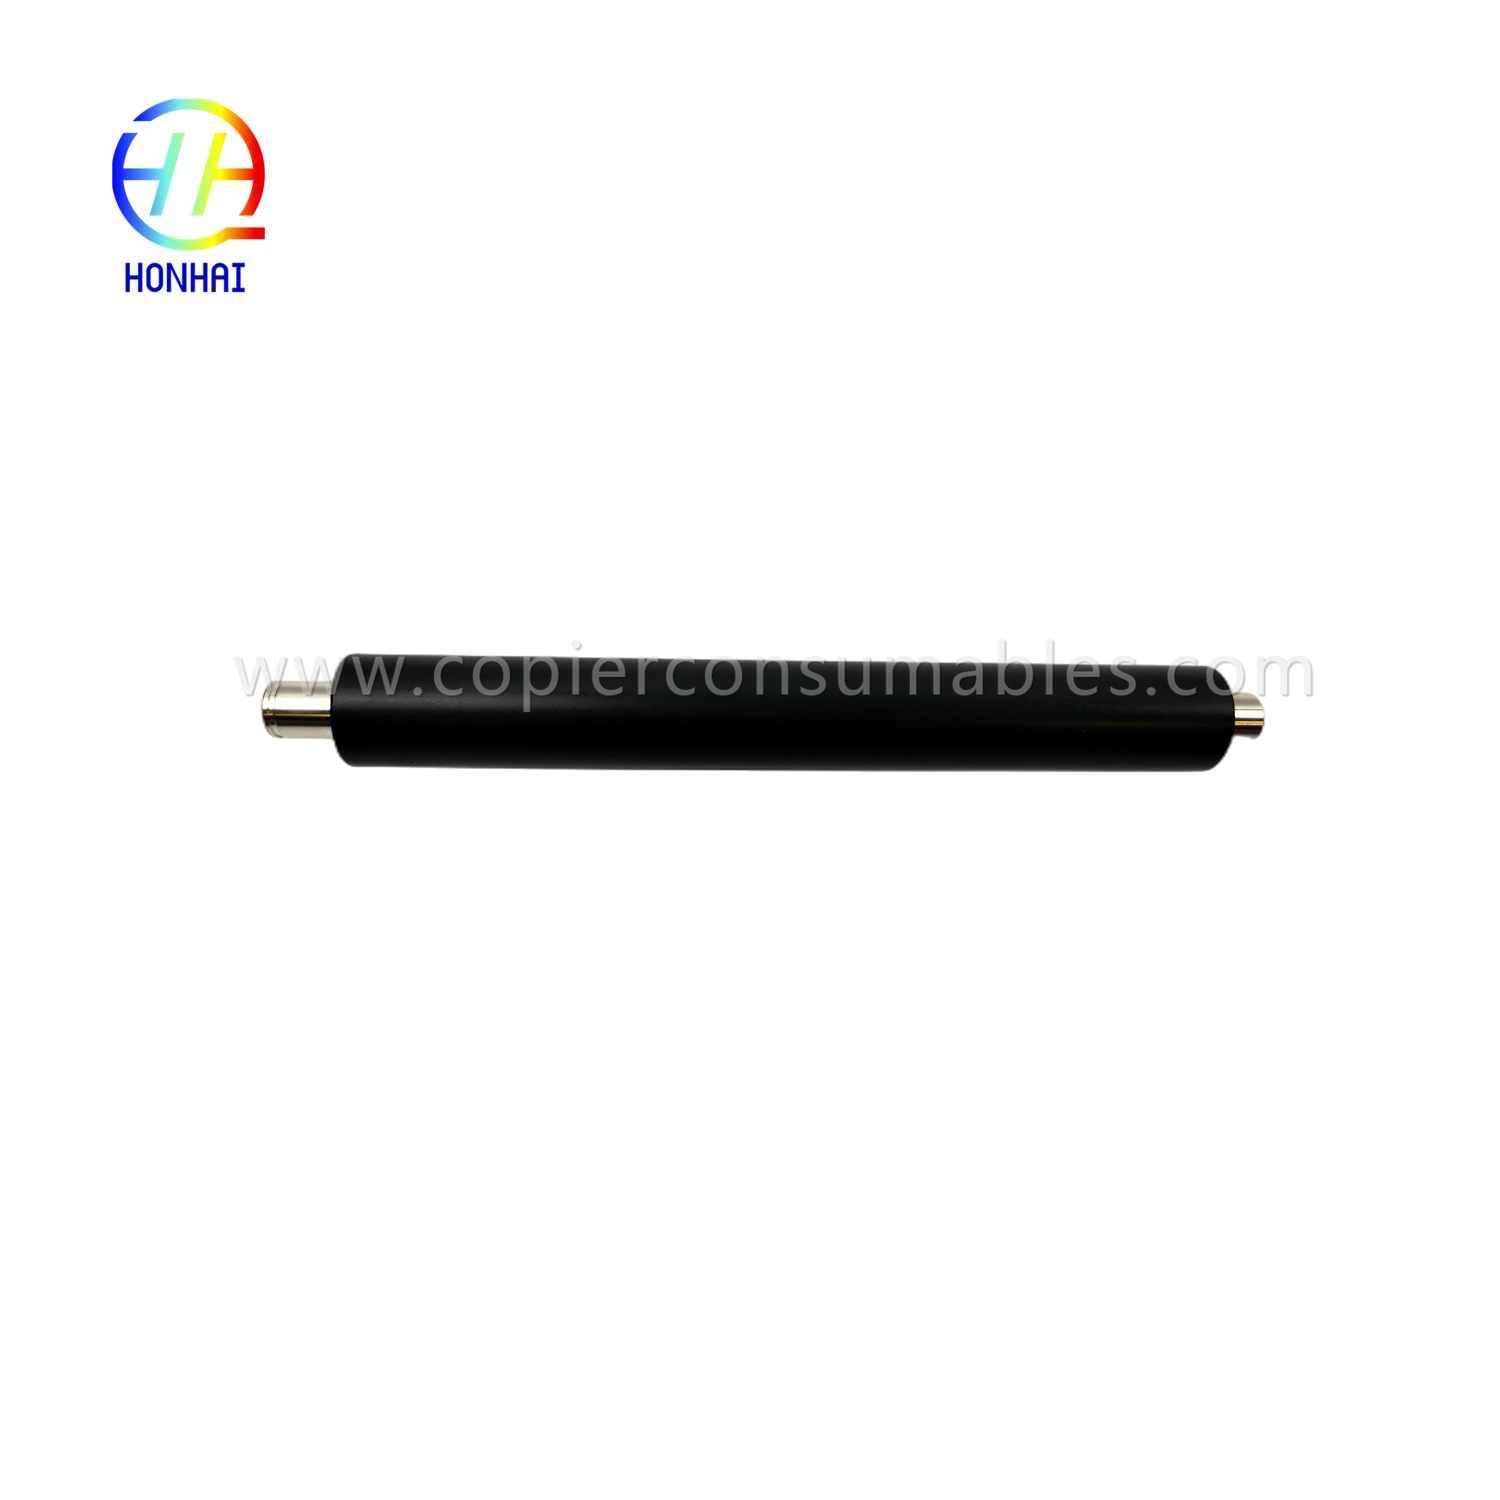 https://www.copierconsumables.com/rullo-fusore-superiore-per-lexmark-t650-t652-t654-x651-x652-x654-x656-x658-upper-roller-heat-roller-product/